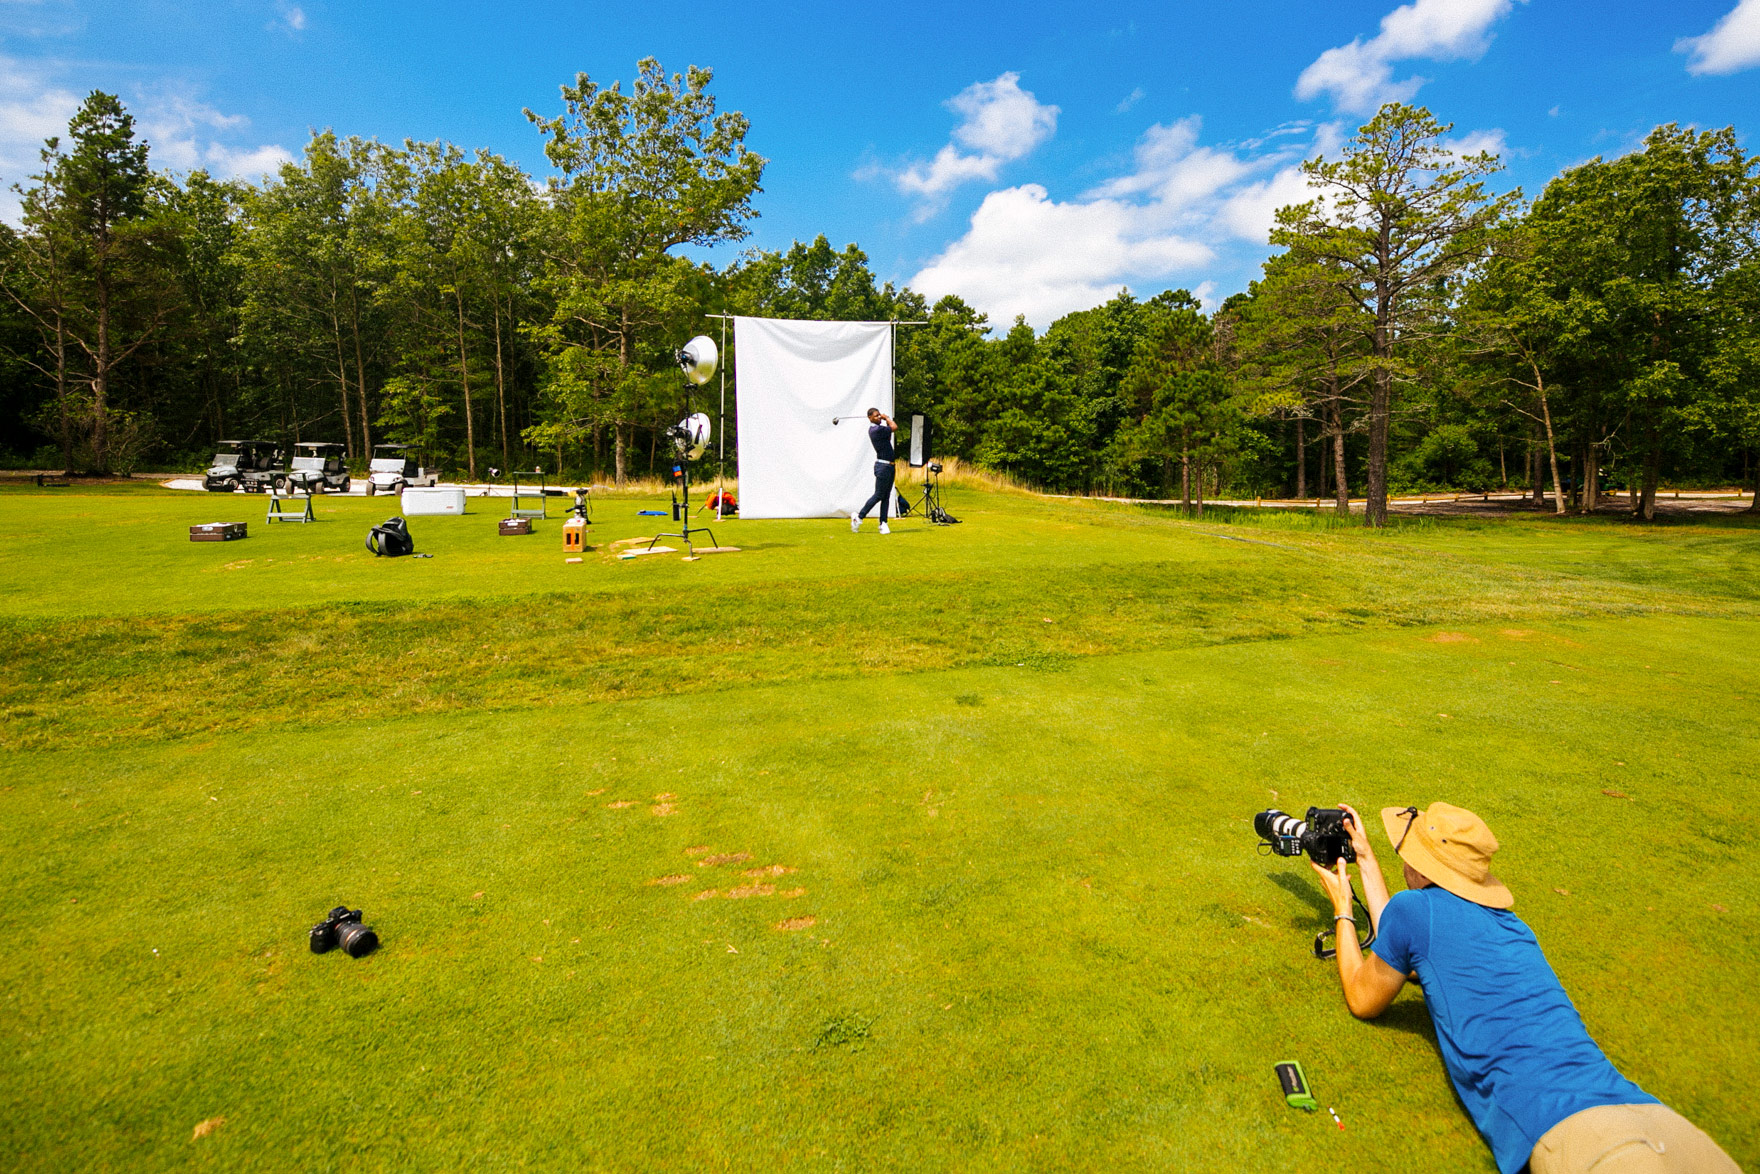 Philadelphia Sports Photographer Steve Boyle  - Behind the Scenes Photoshoot - Golf